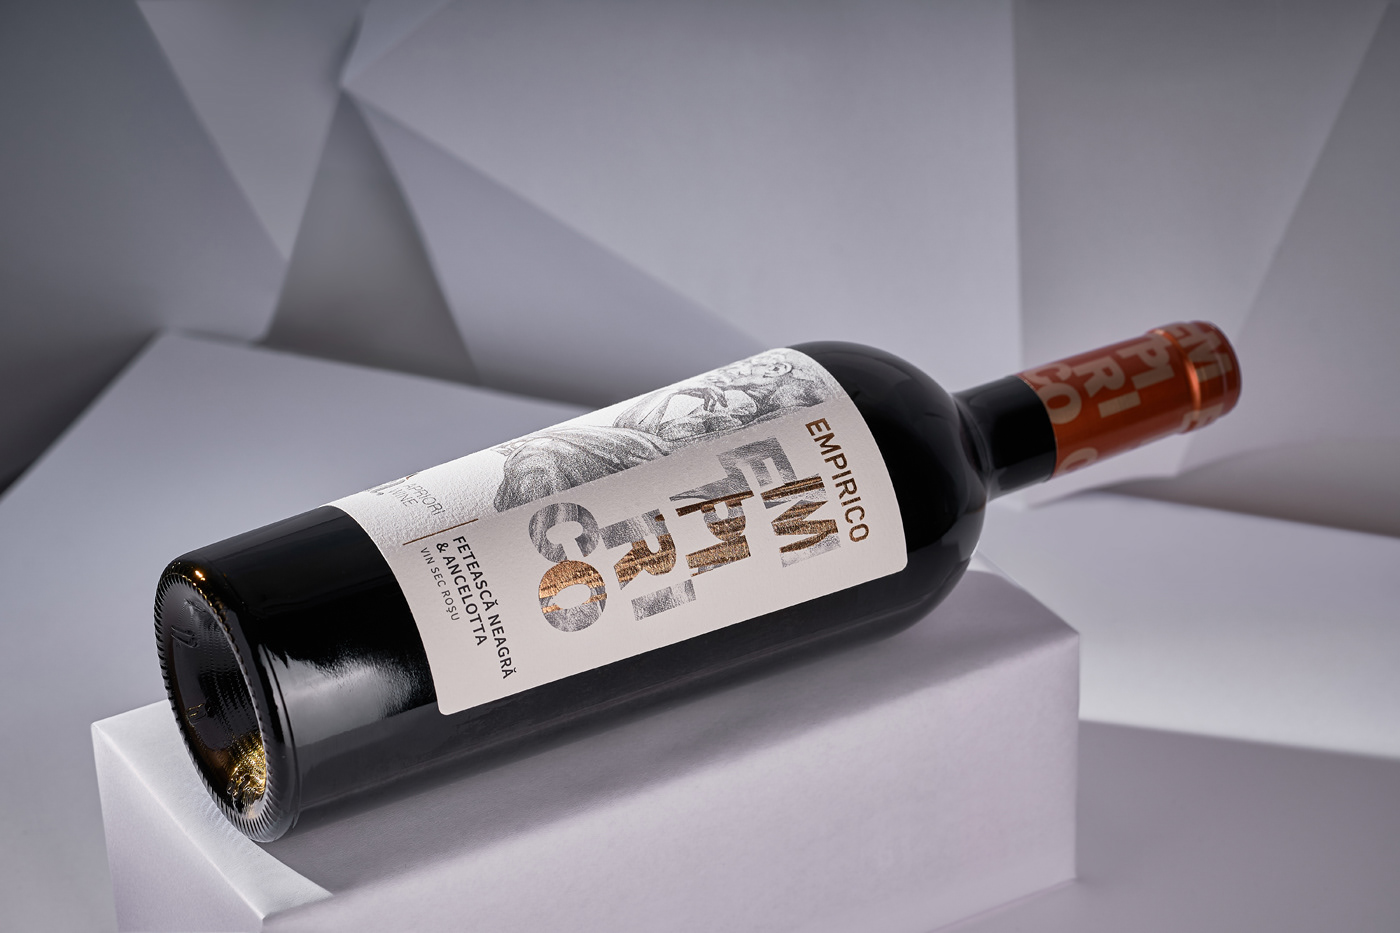 43oz apriori design studio Empirico ILLUSTRATION  label design Moldova Packaging Thinker wine label